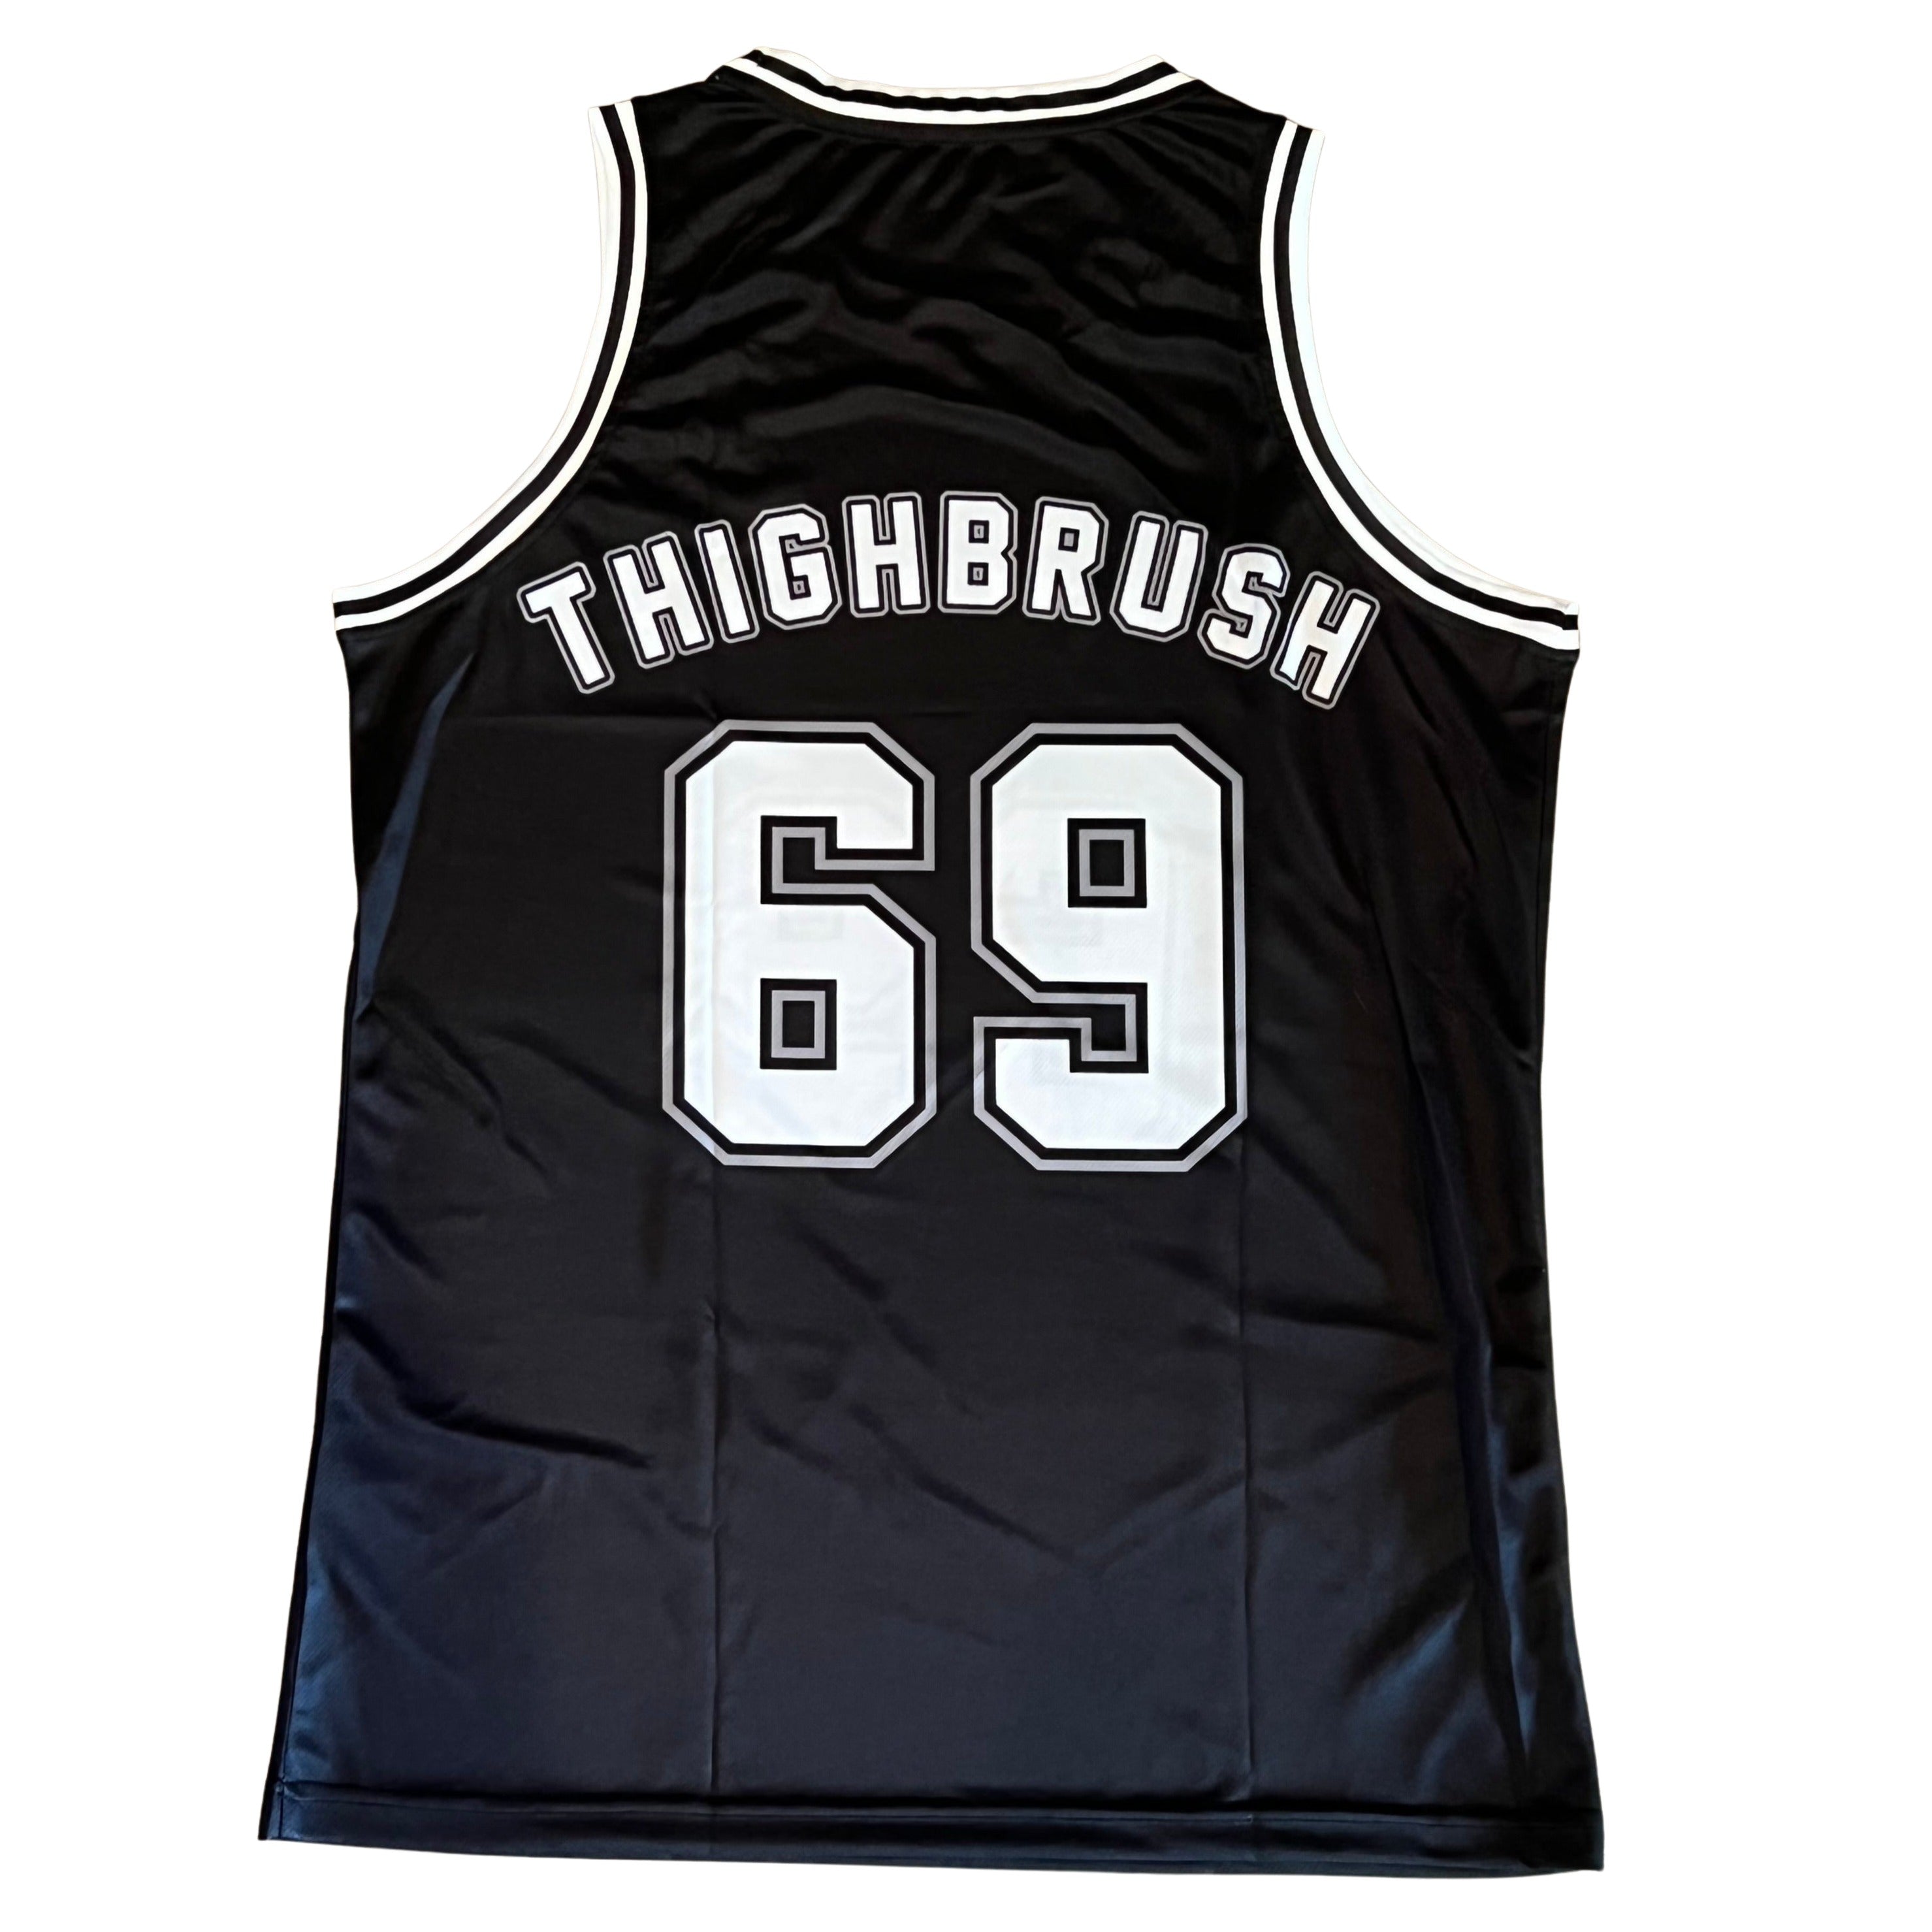 THIGHBRUSH® ATHLETICS - THIGHBRUSH 69 - HOME - MEN'S EMBROIDERED FOOTBALL  JERSEY - BLACK